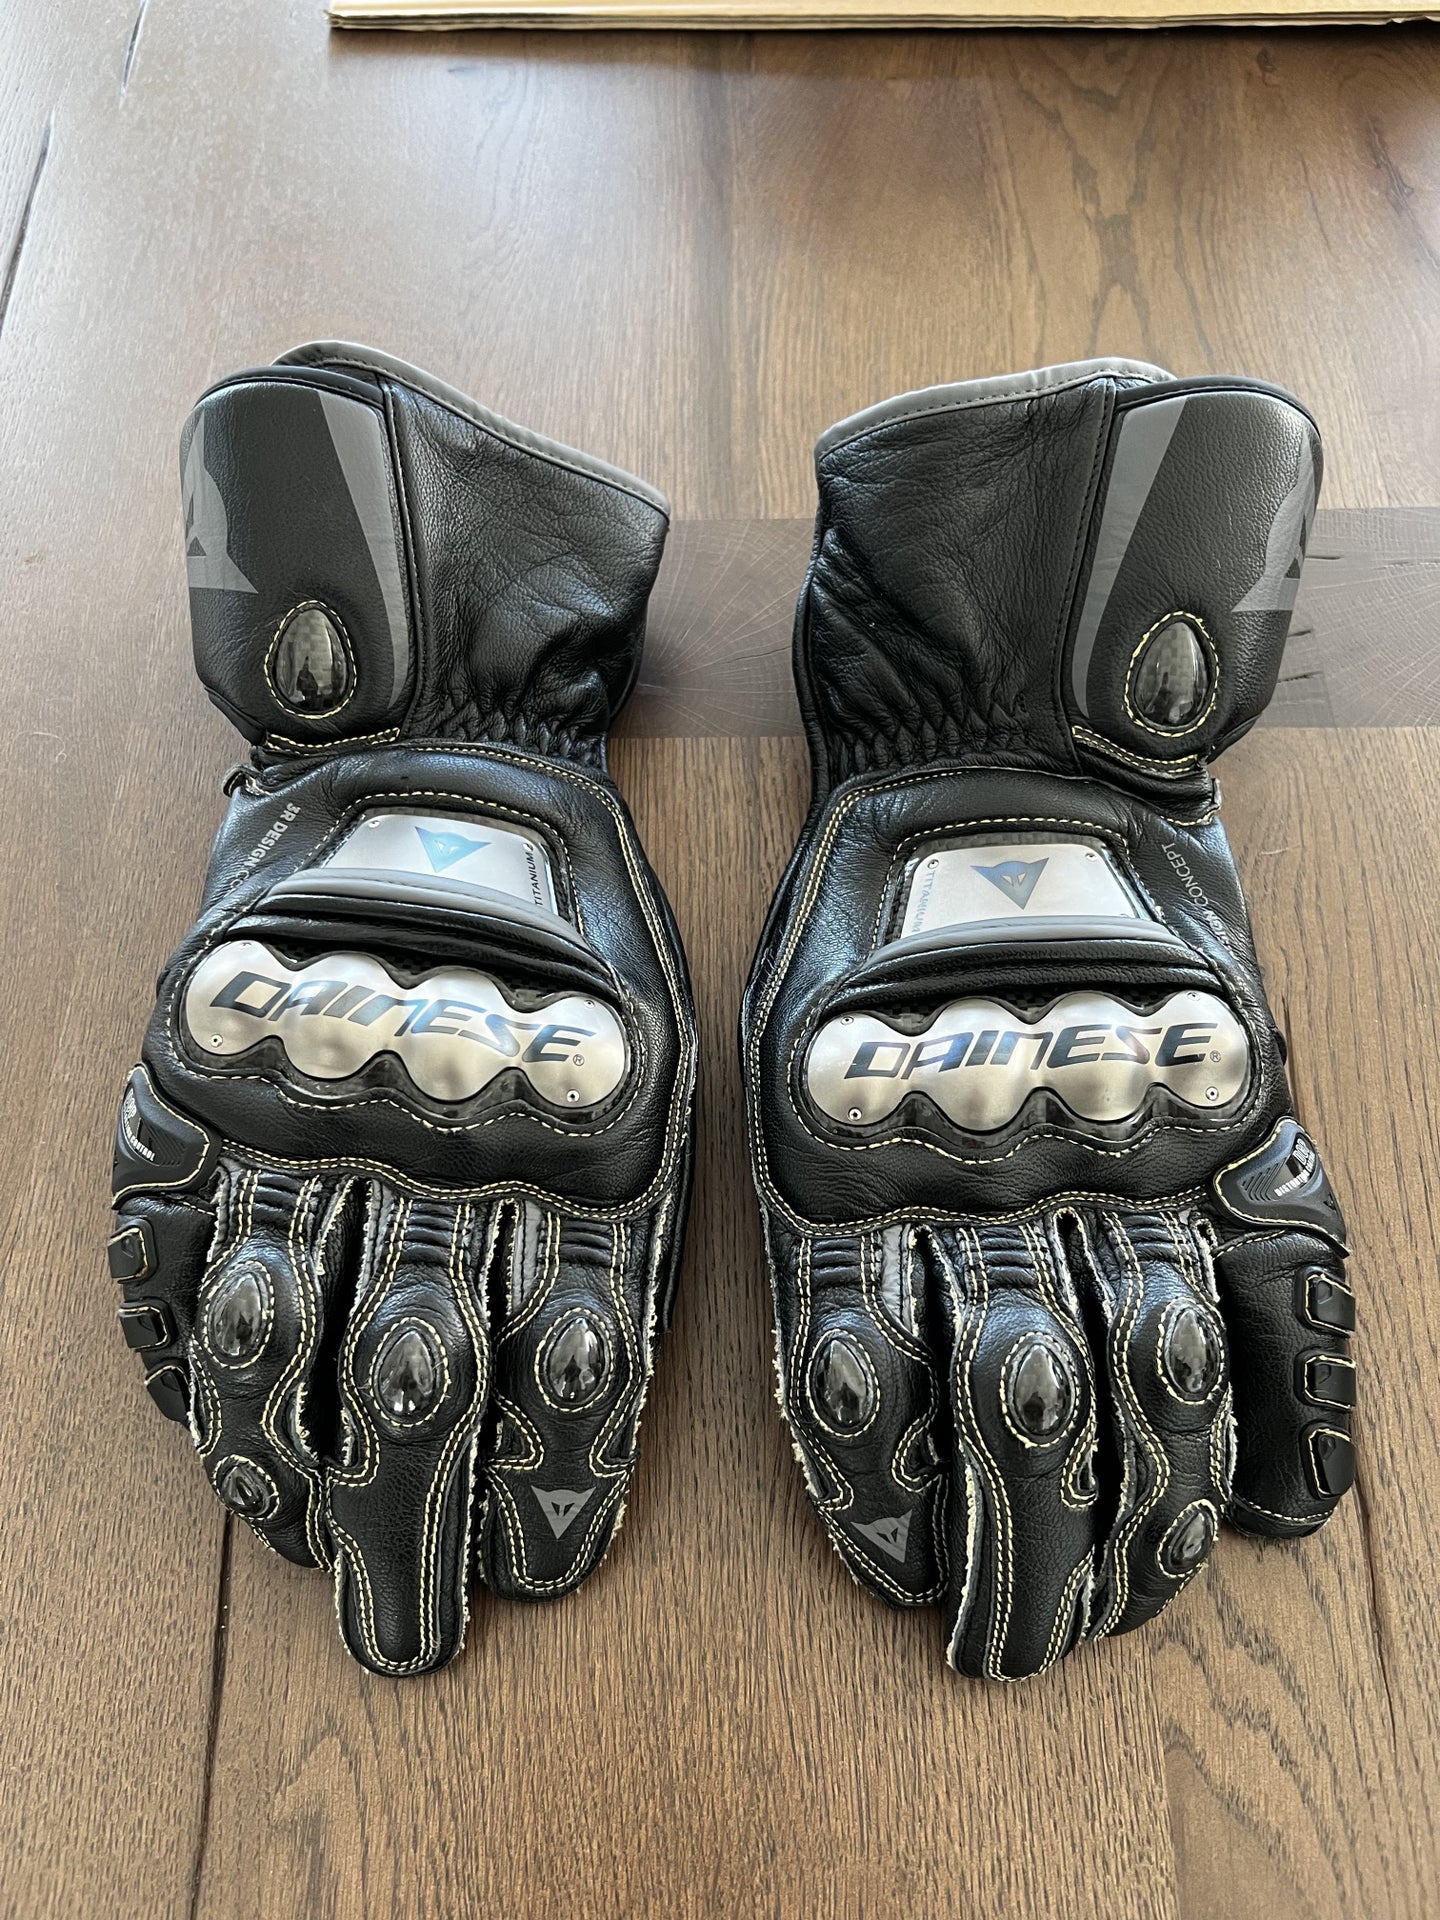 Dainese Full Metal 6 Gloves - Men's 9.5/XL | BMW S1000RR Forum